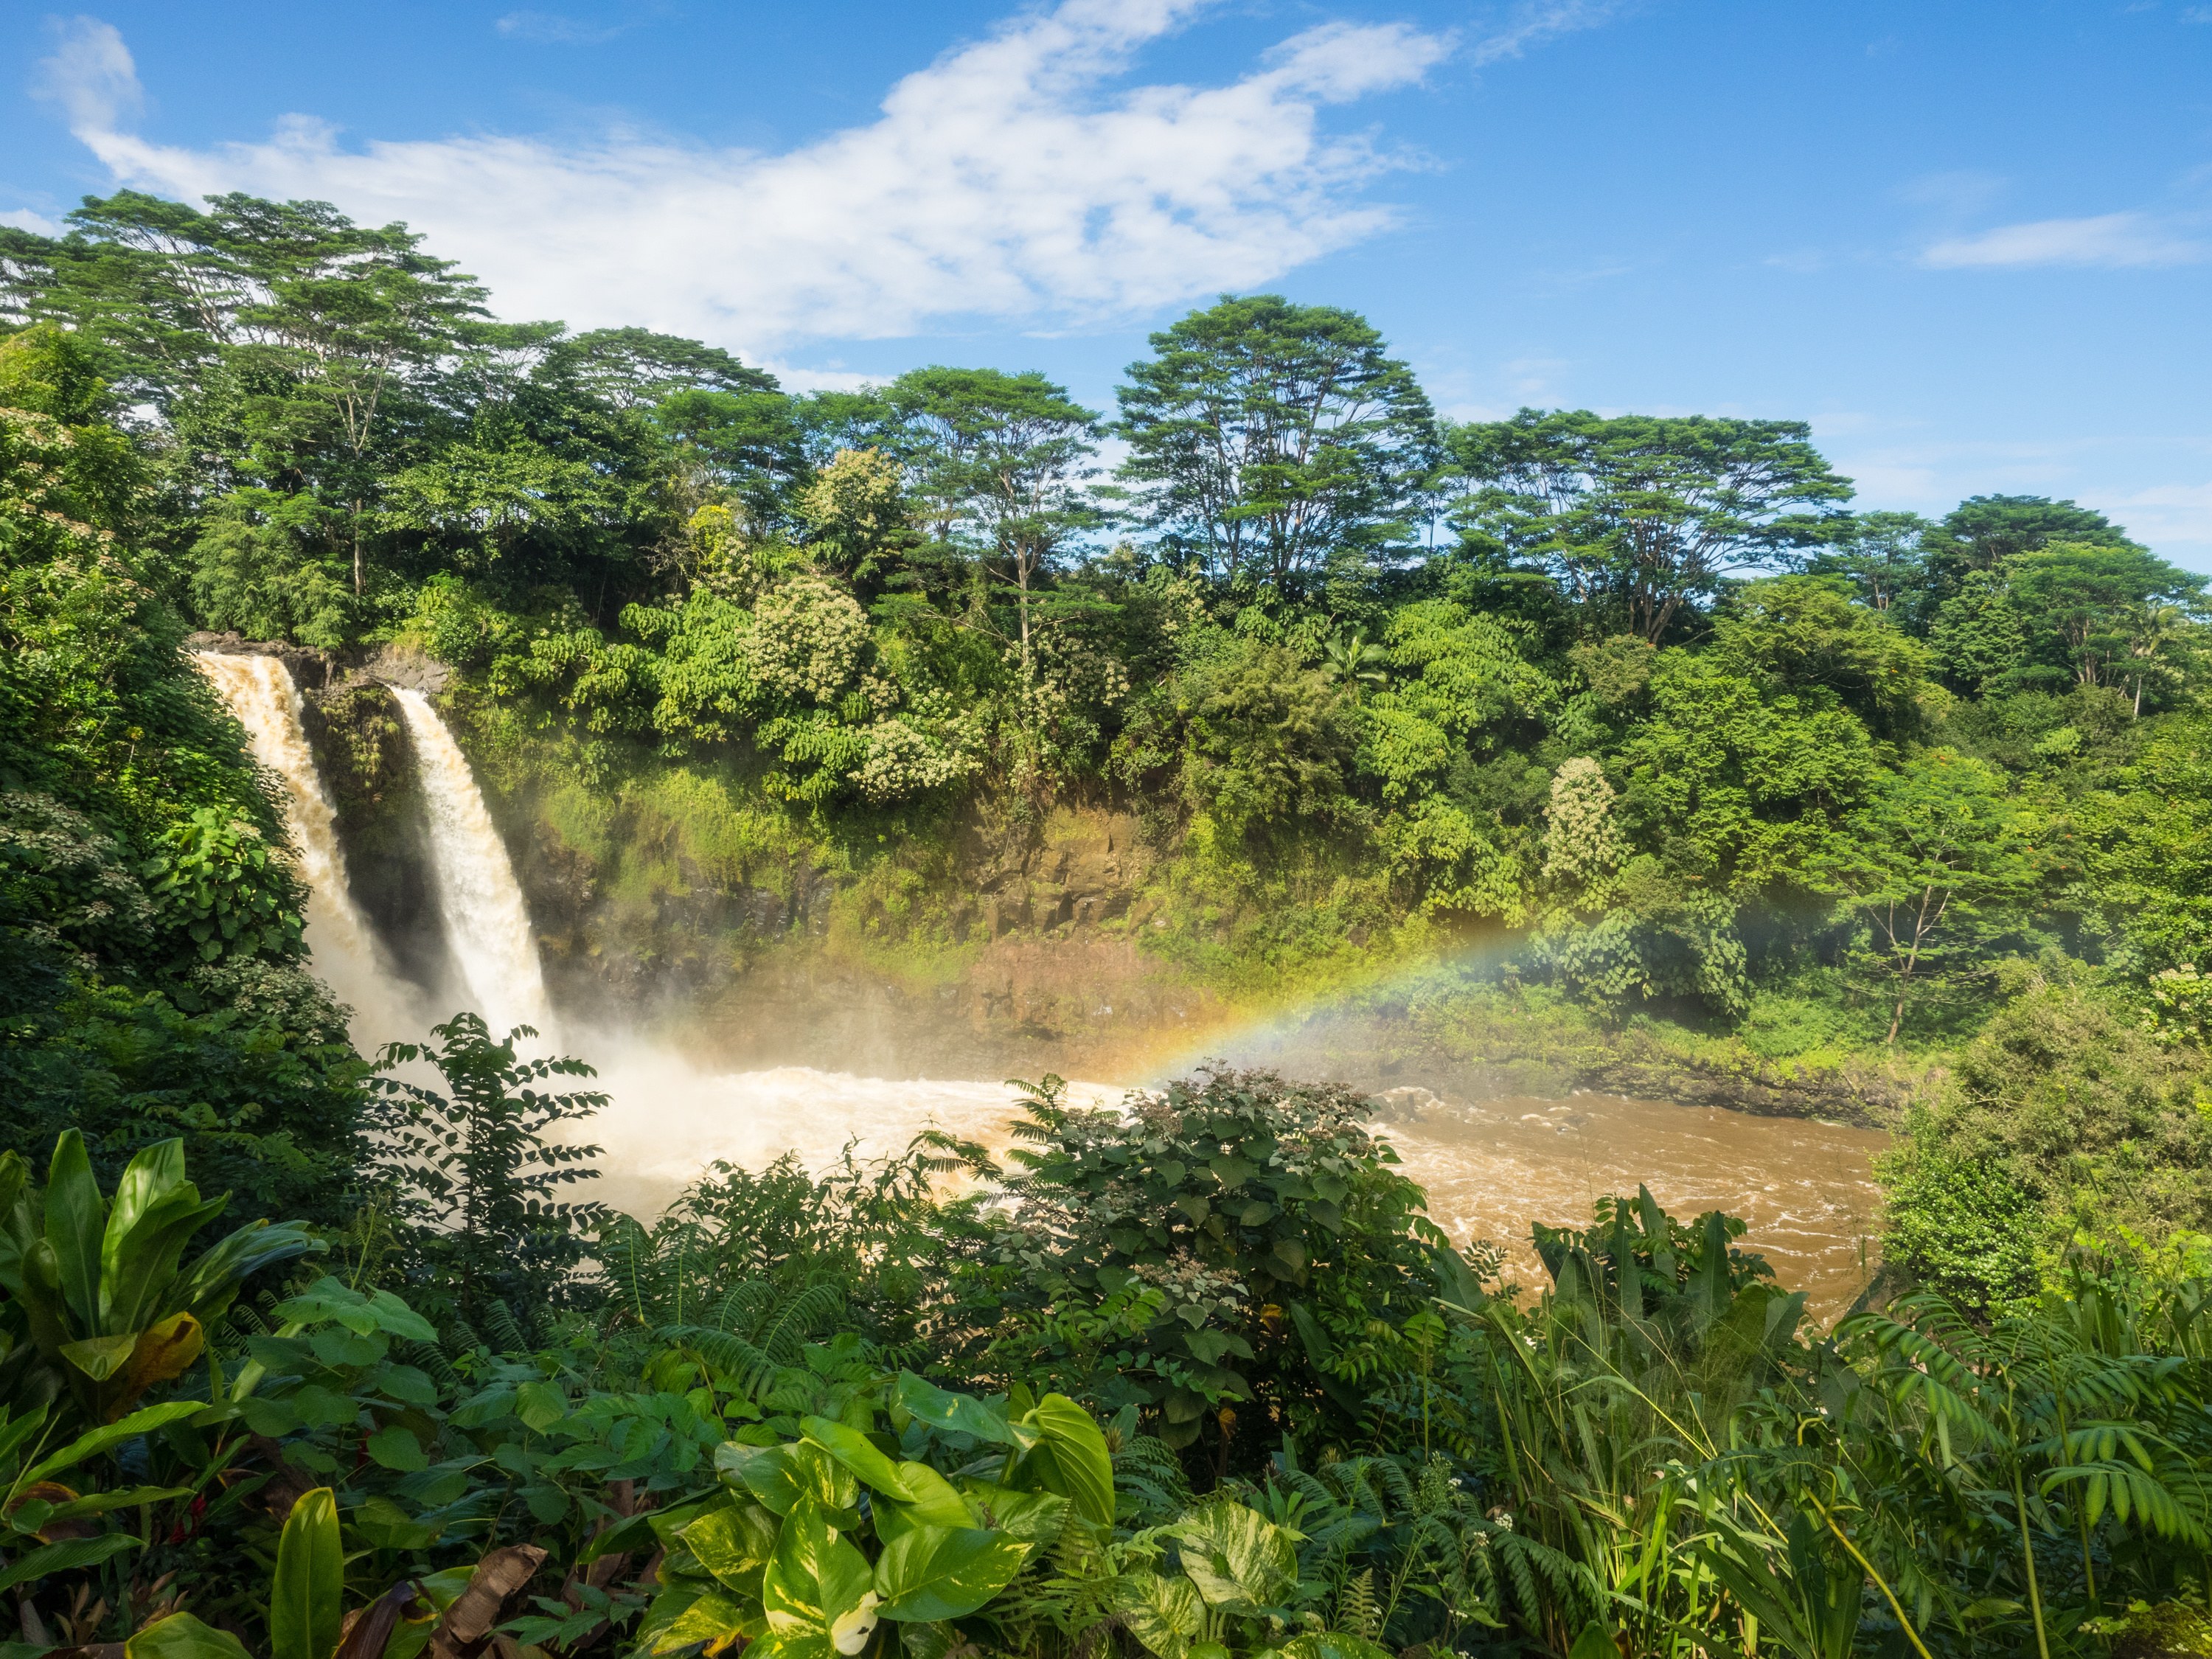 Rainbow (Waianuenue) Falls is a waterfall located in Hilo, Hawaii.